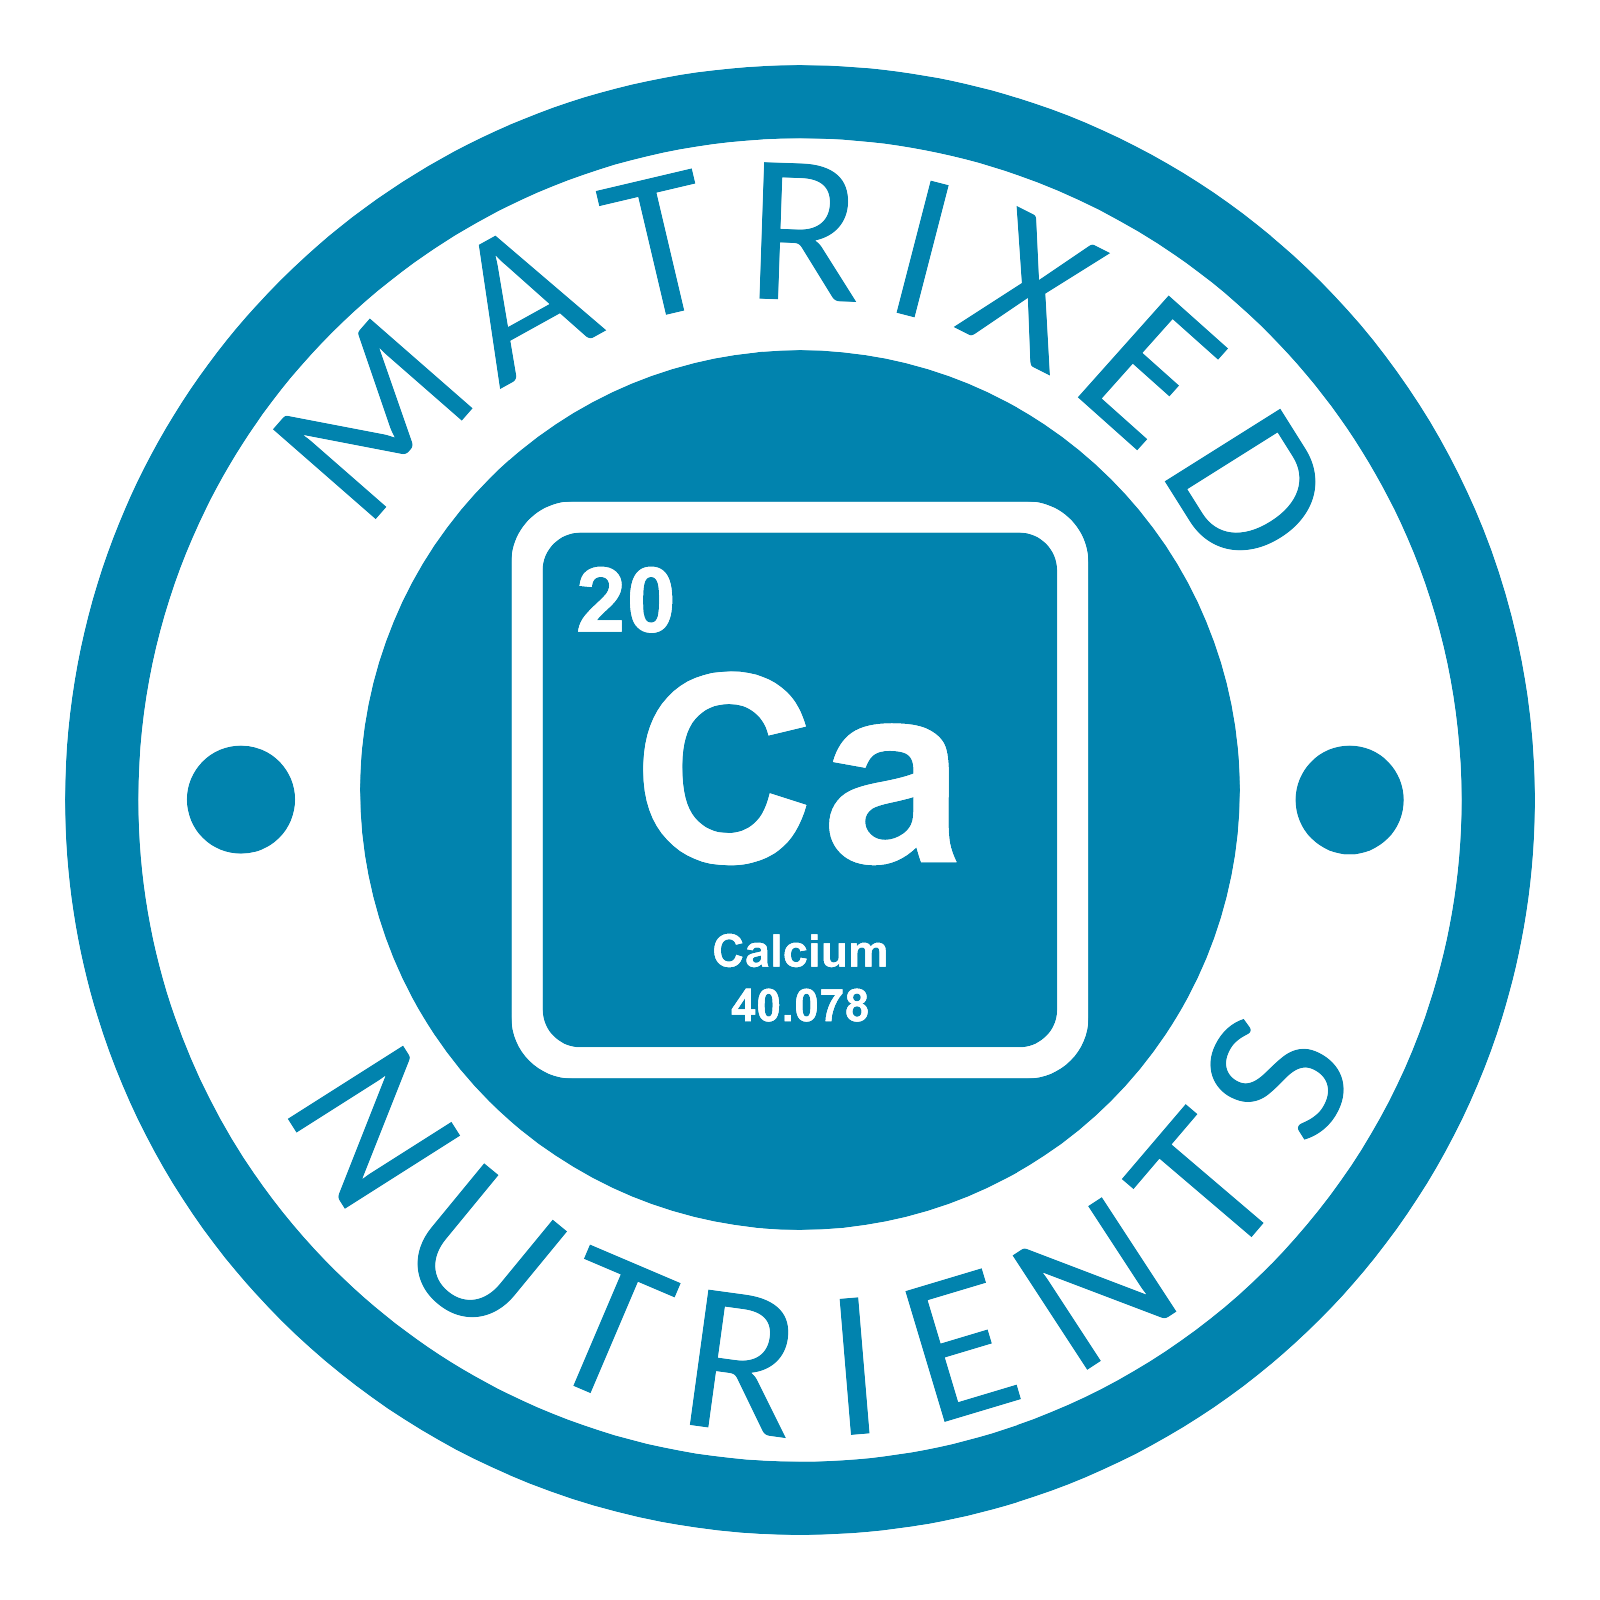 Matrixed Nutrients